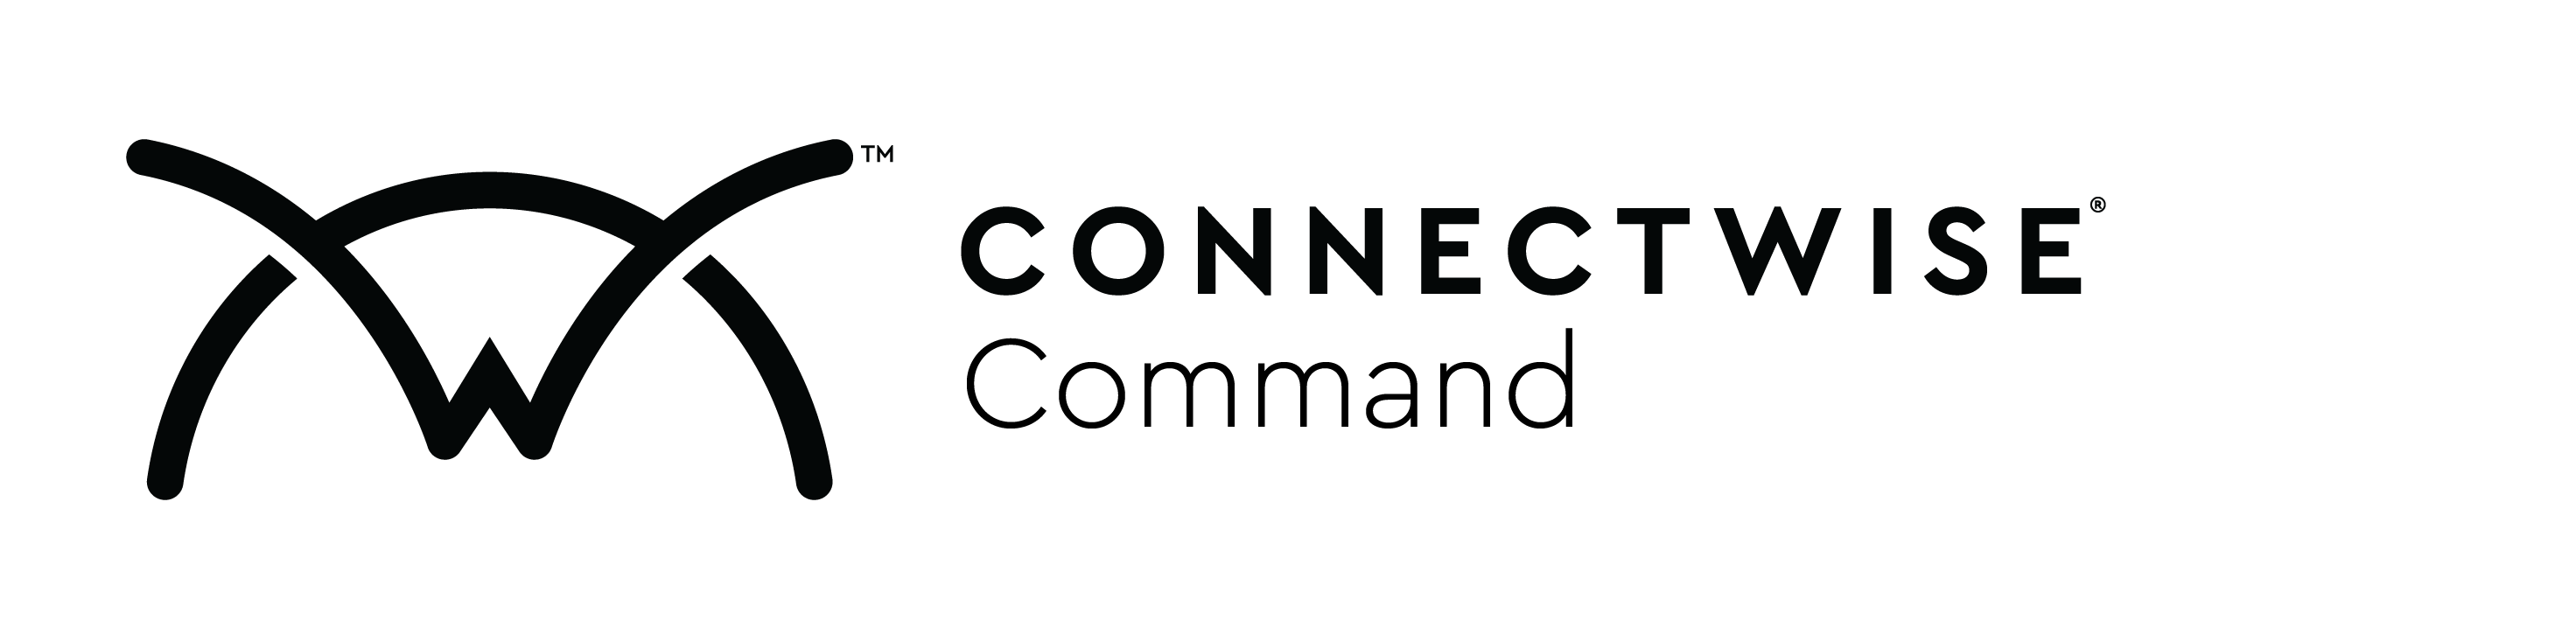 ConnectWise Command logo, horizontal black